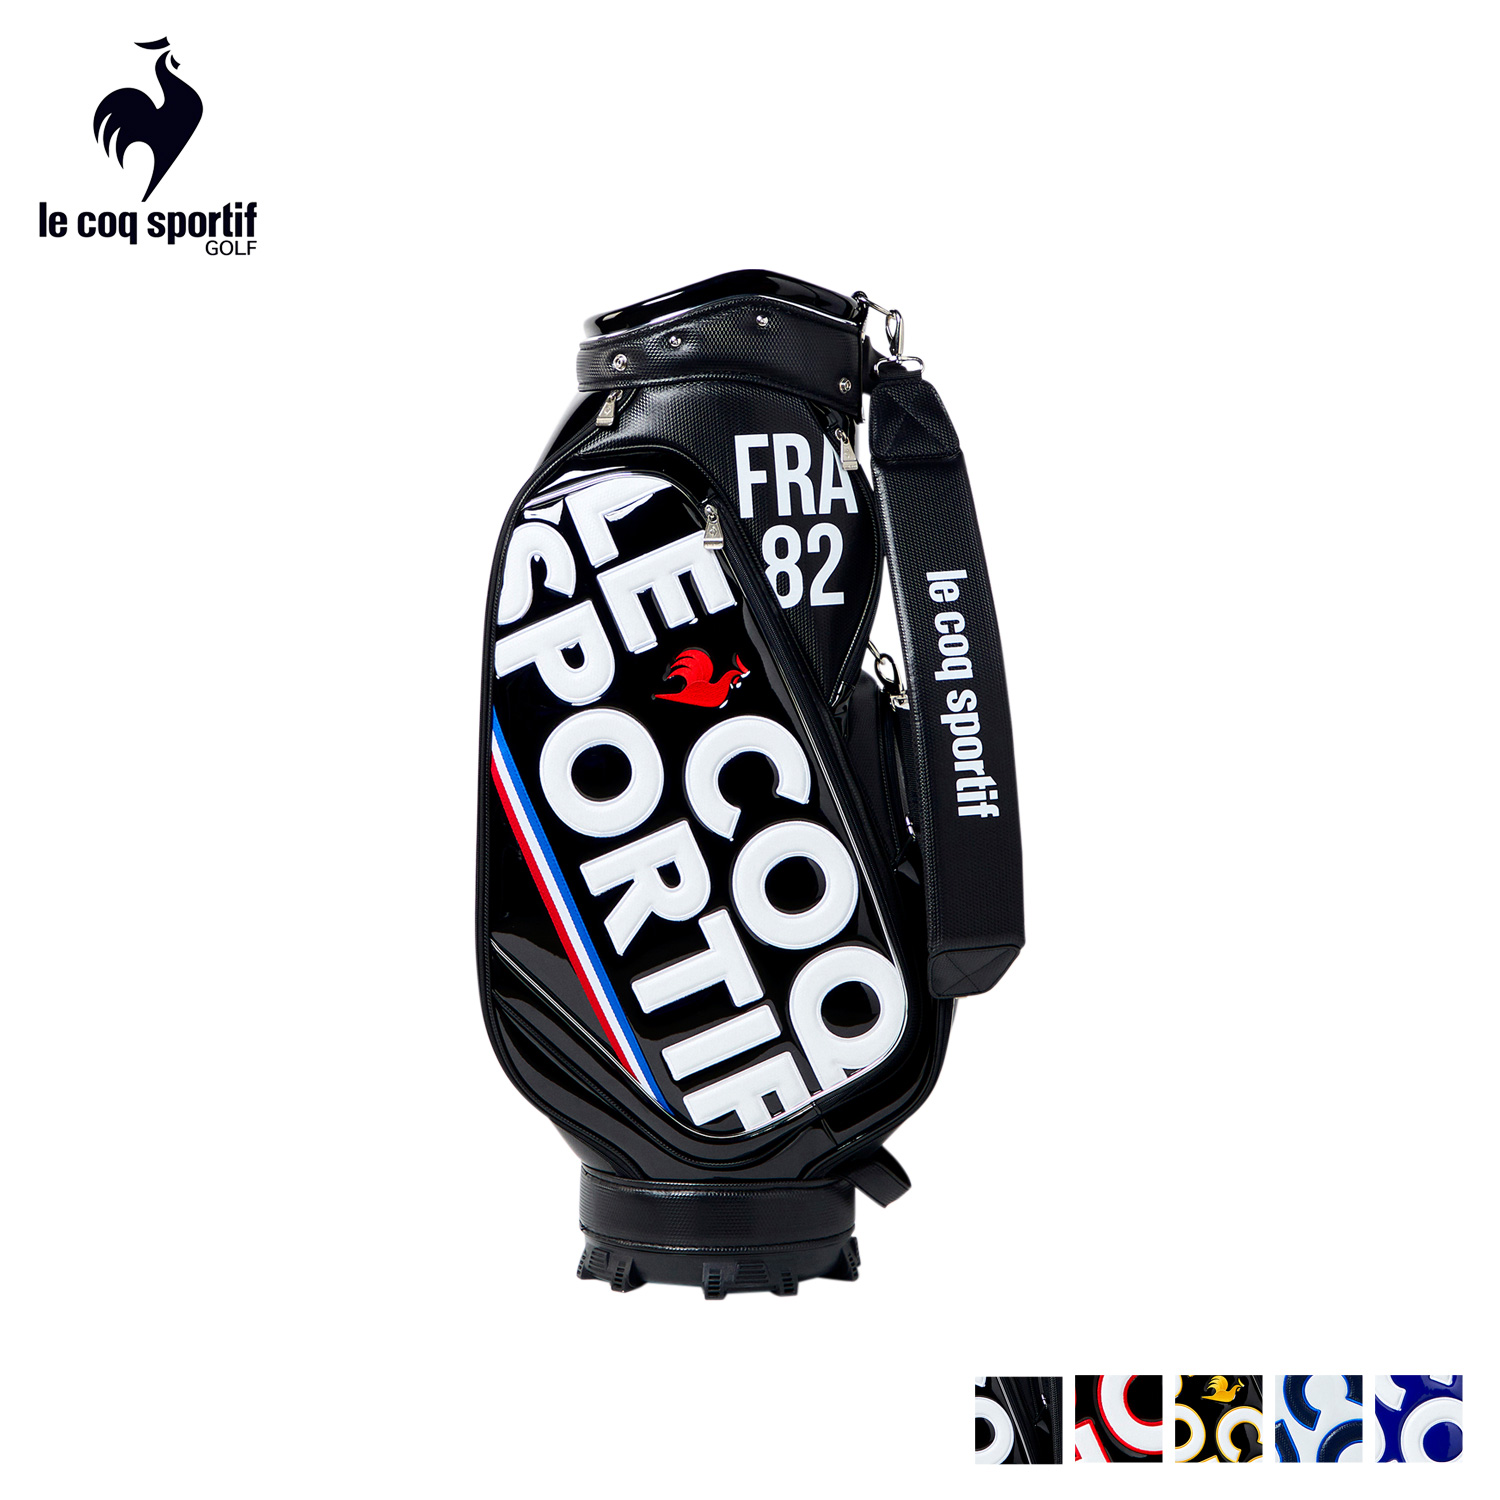 le coq sportif golf ルコックスポルティフ ゴルフ ゴルフバッグ キャディバッグ ビッグロゴグラフィック メンズ ブラック ホワイト ネイビー レッド イエロー 黒 白 QQBTJJ03